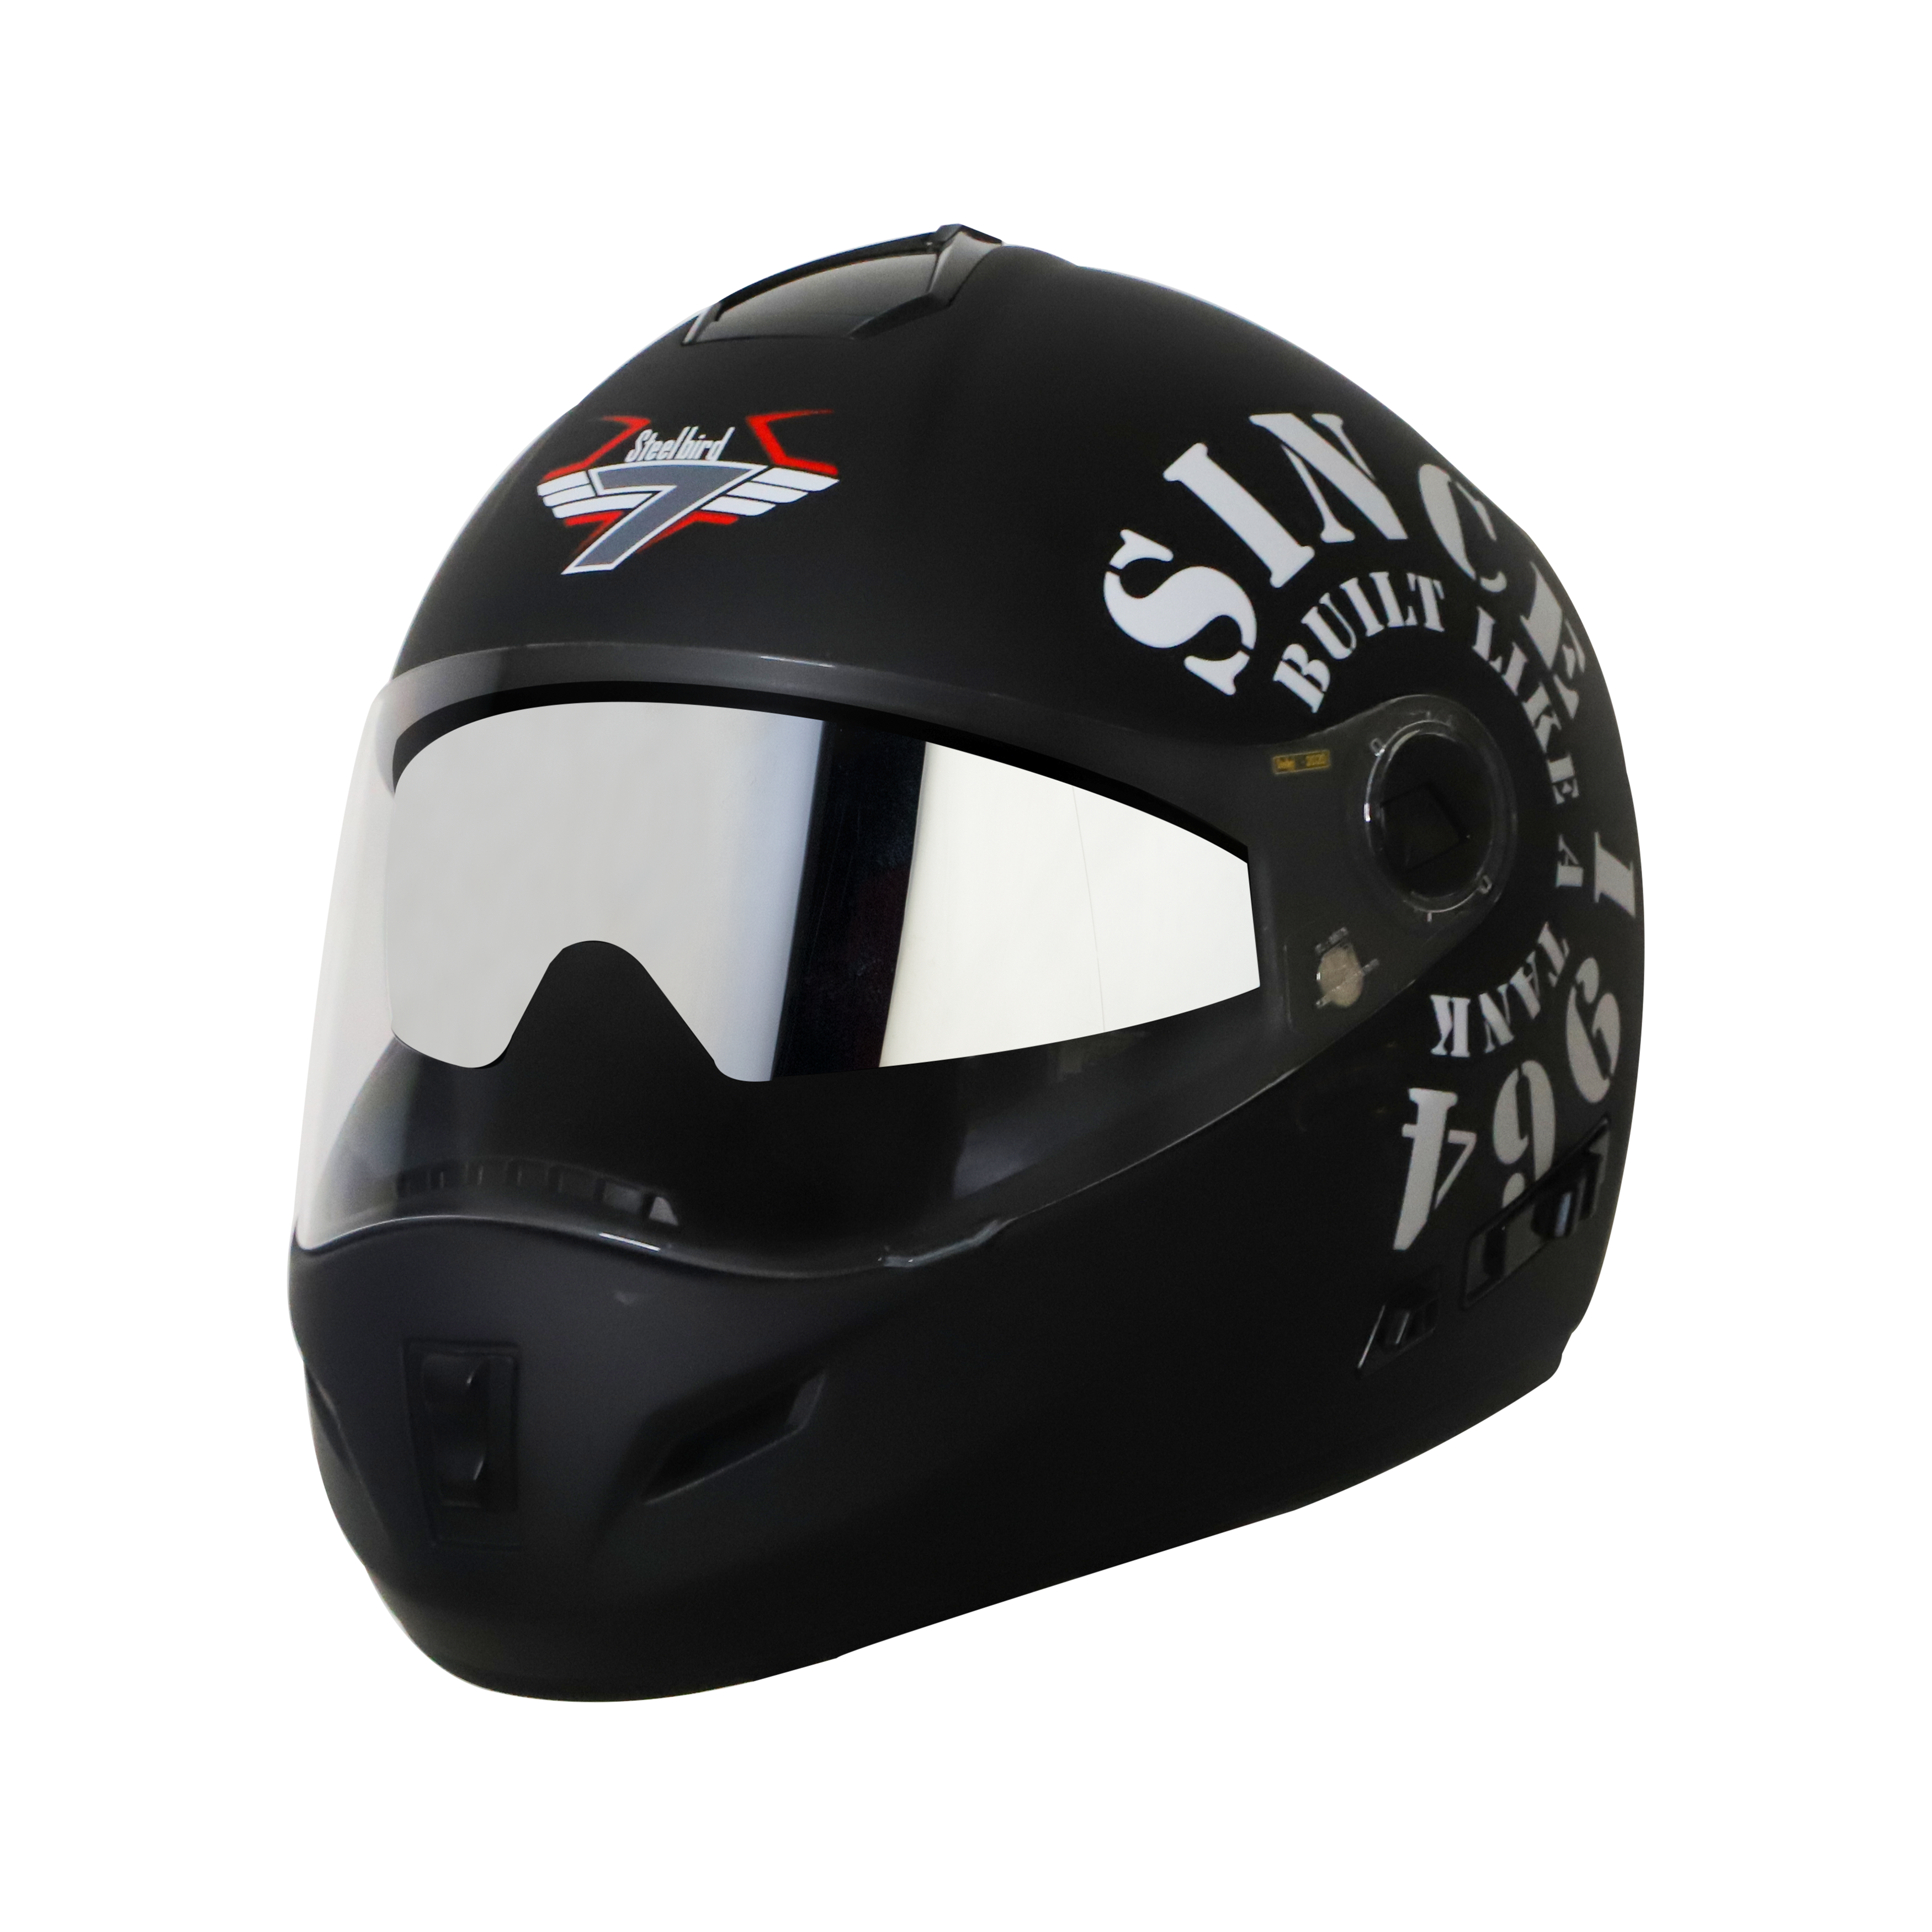 Steelbird Cyborg Tank Full Face Helmet With Chrome Silver Sun Shield, ISI Certified Helmet (Matt Black White)